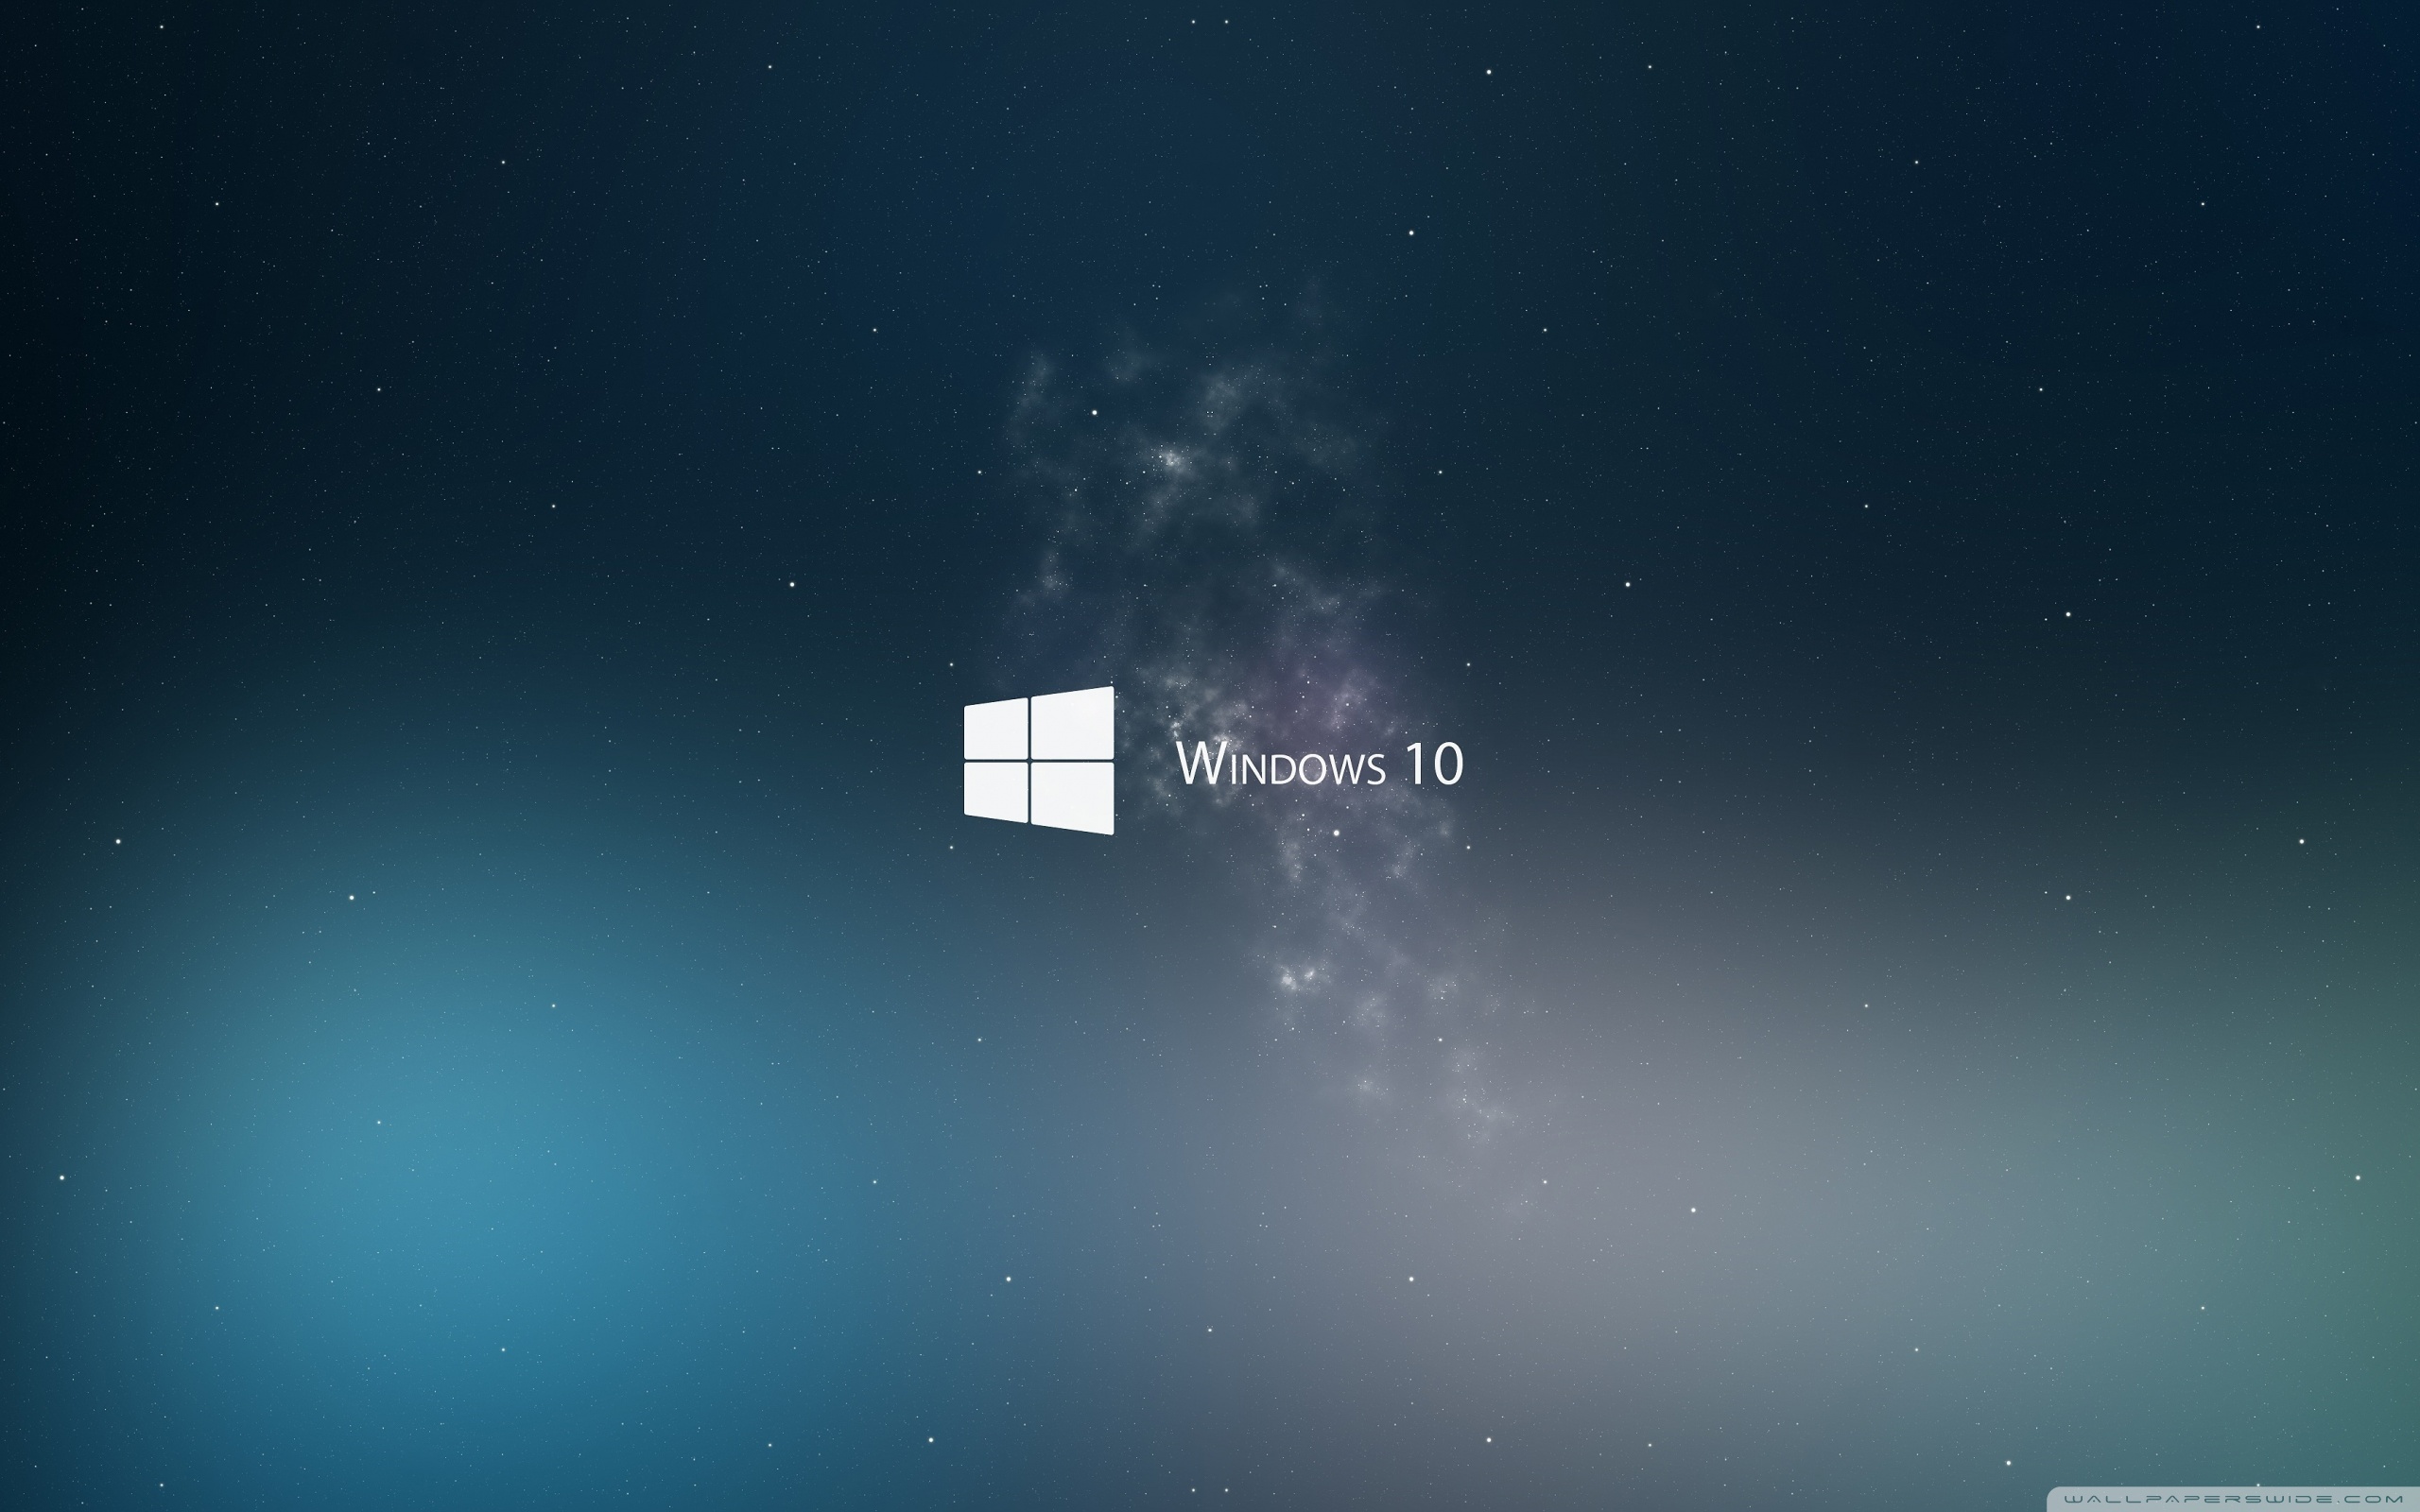 Windows 10 Ultra Hd Desktop Background Wallpaper For Widescreen Ultrawide Desktop Laptop Multi Display Dual Monitor Tablet Smartphone